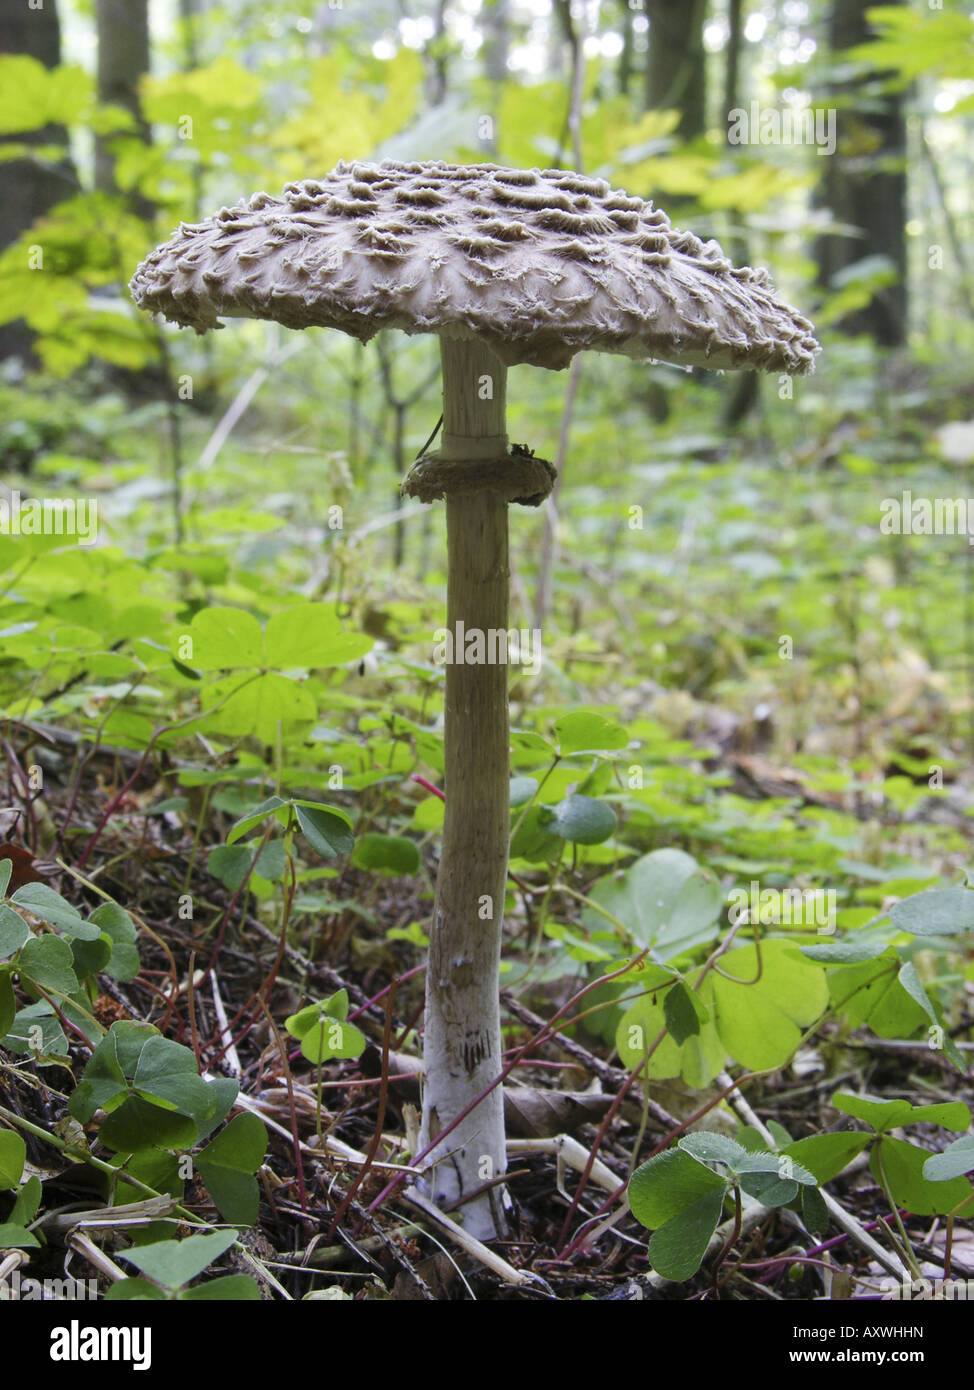 Shaggy parasol (Chlorophyllum rachodes, Macrolepiota rachodes, Chlorophyllum racodes, Macrolepiota racodes), at forest ground Stock Photo